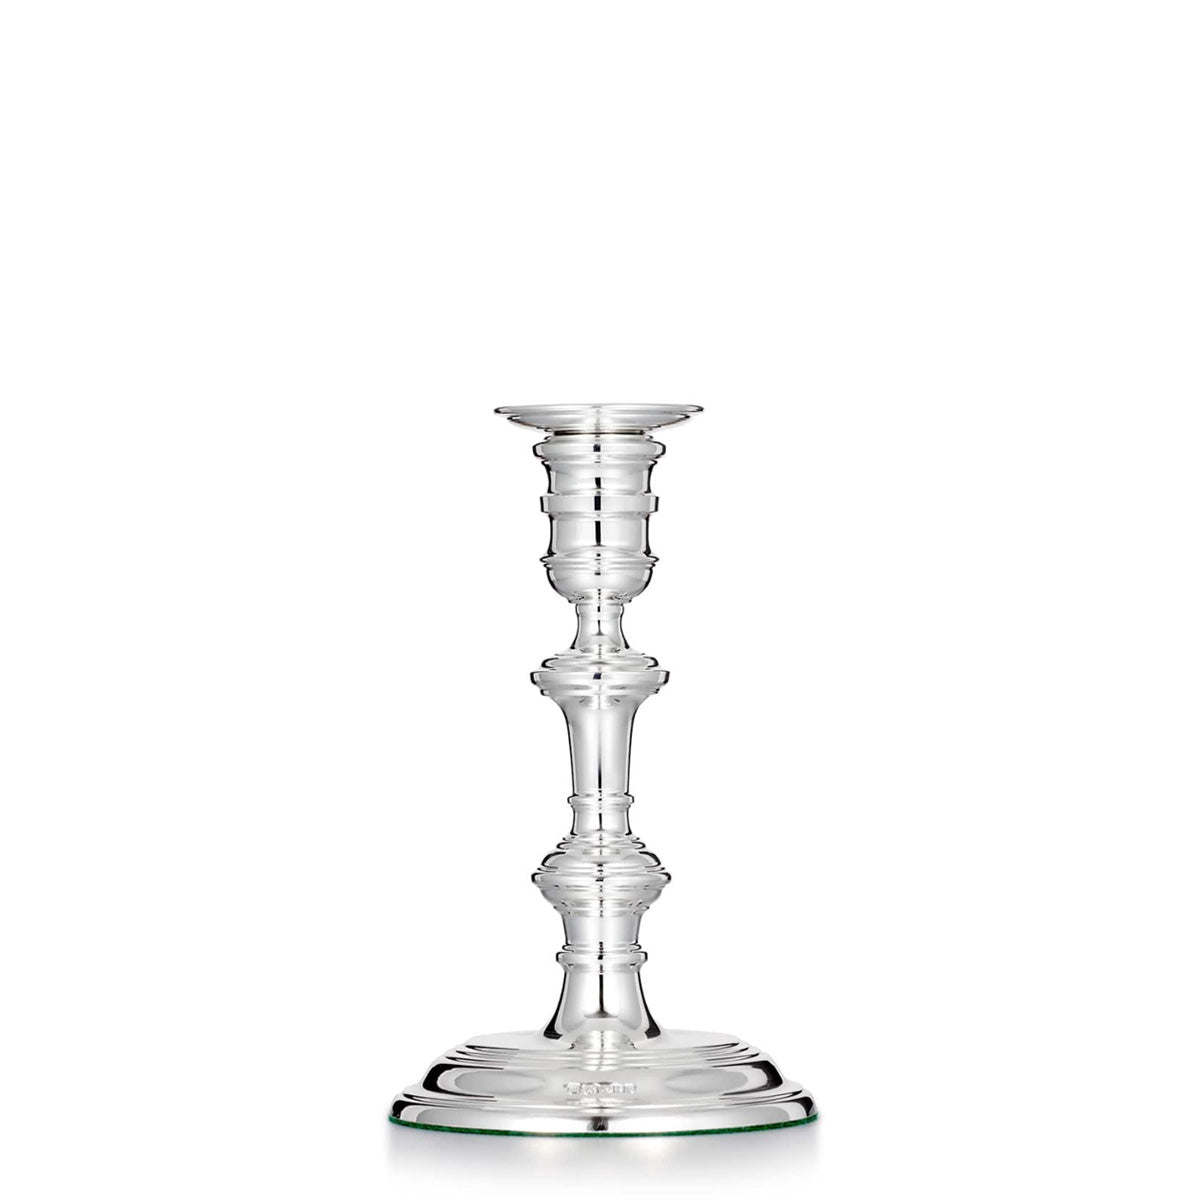 Silver georgian candlestick